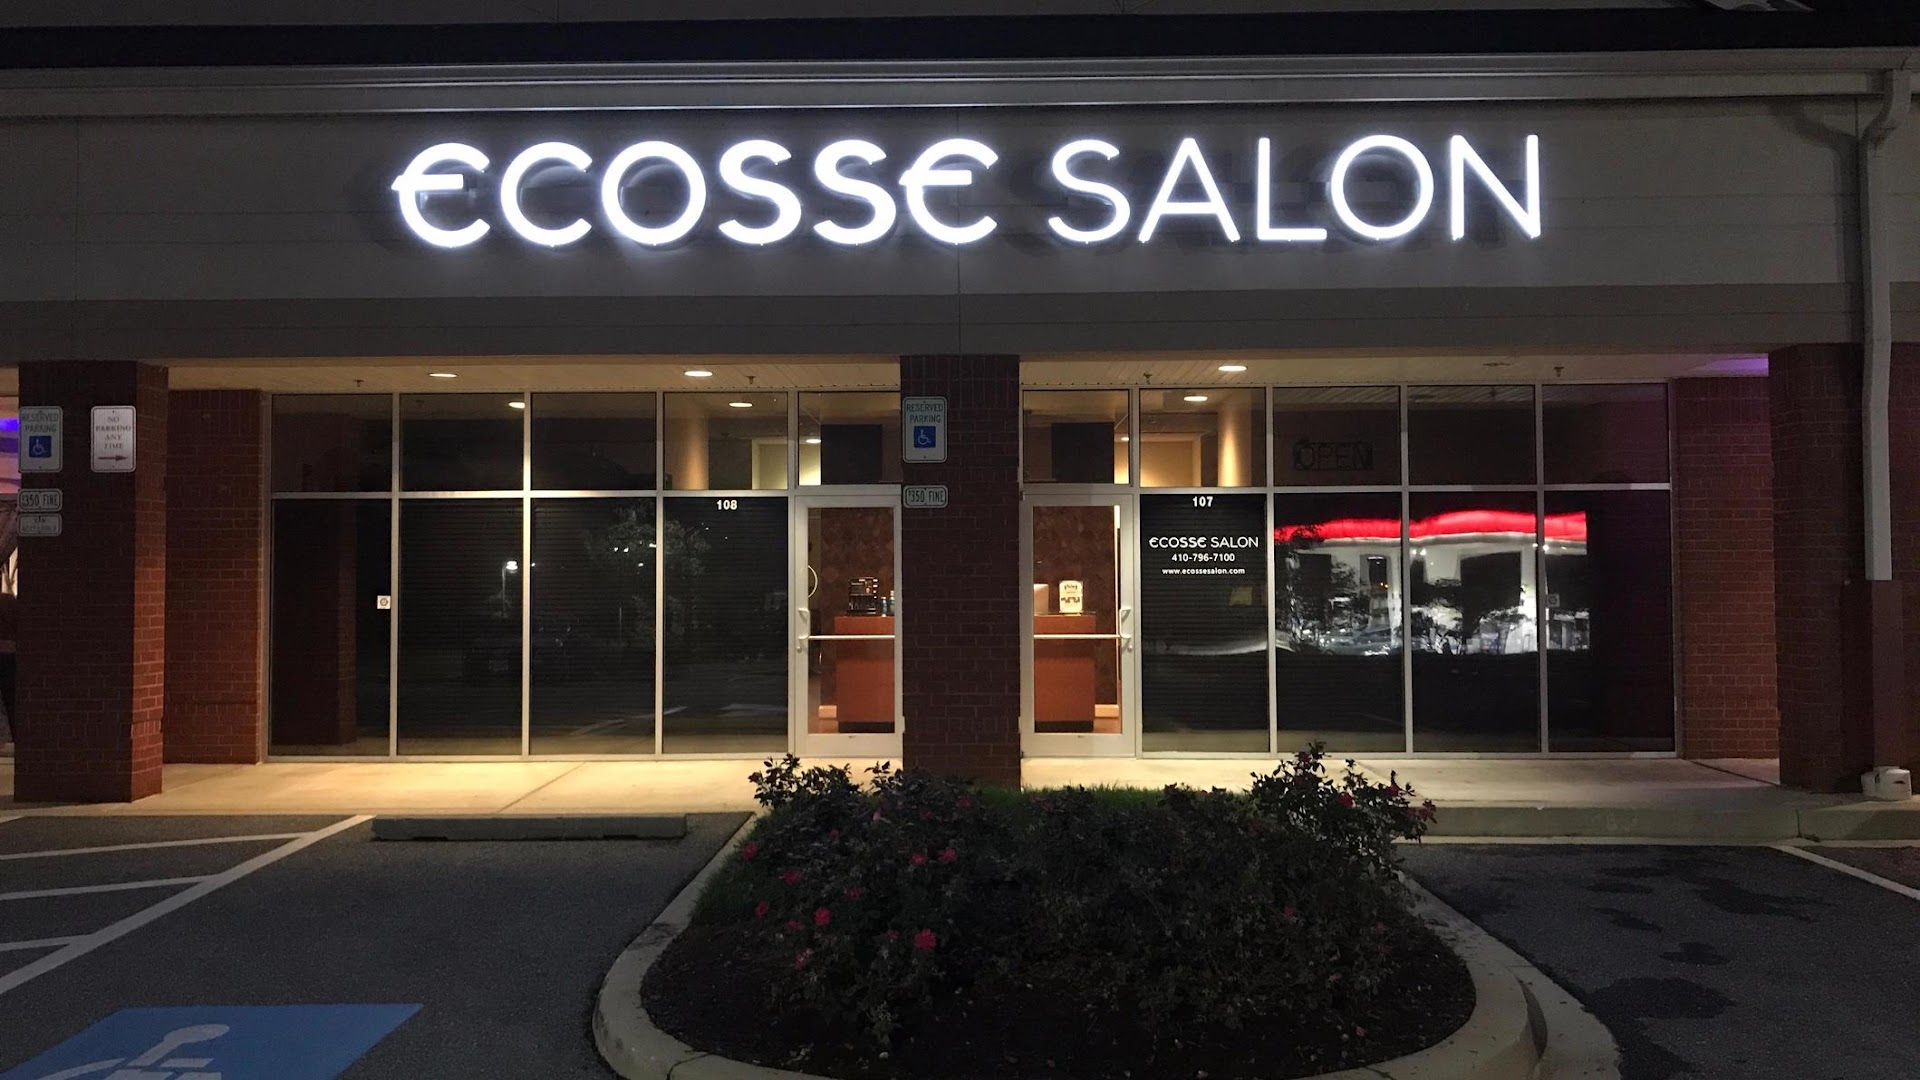 Ecosse Salon